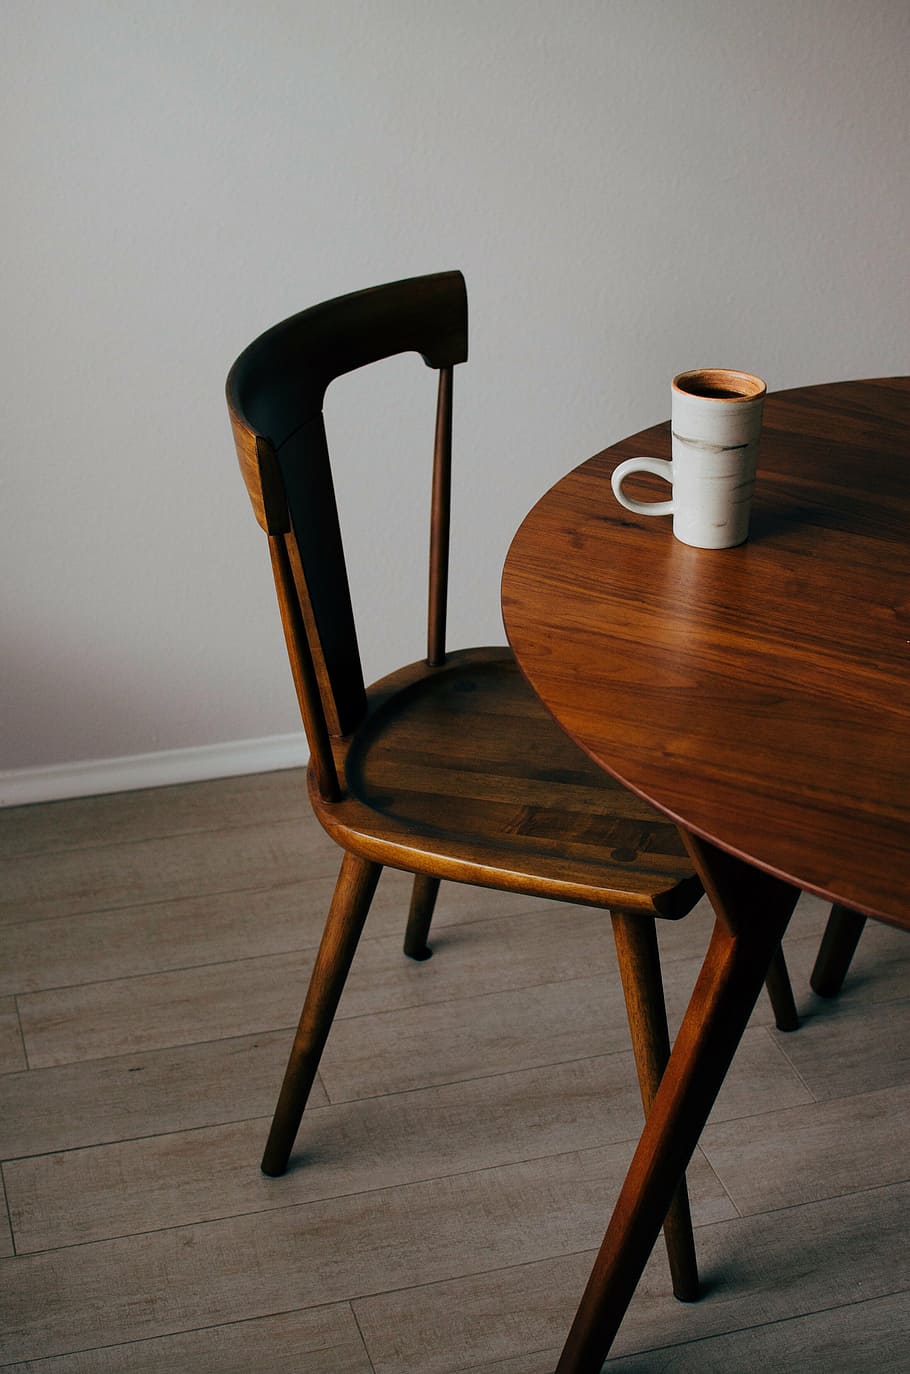 brown, wooden, chair, white, ceramic, coffee mug, table, mug, cup, coffee